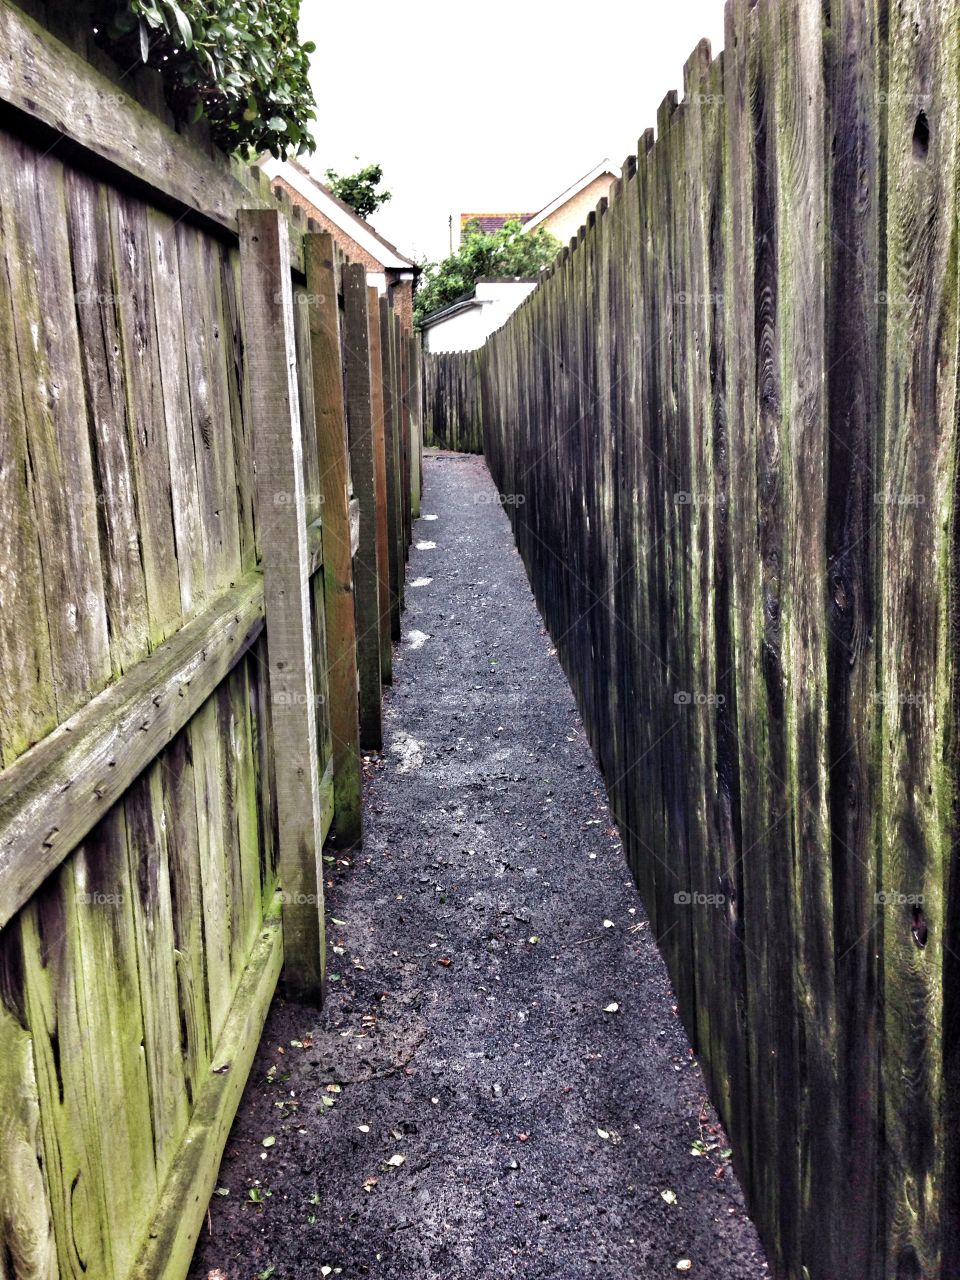 Passage way. Footpath between fences
